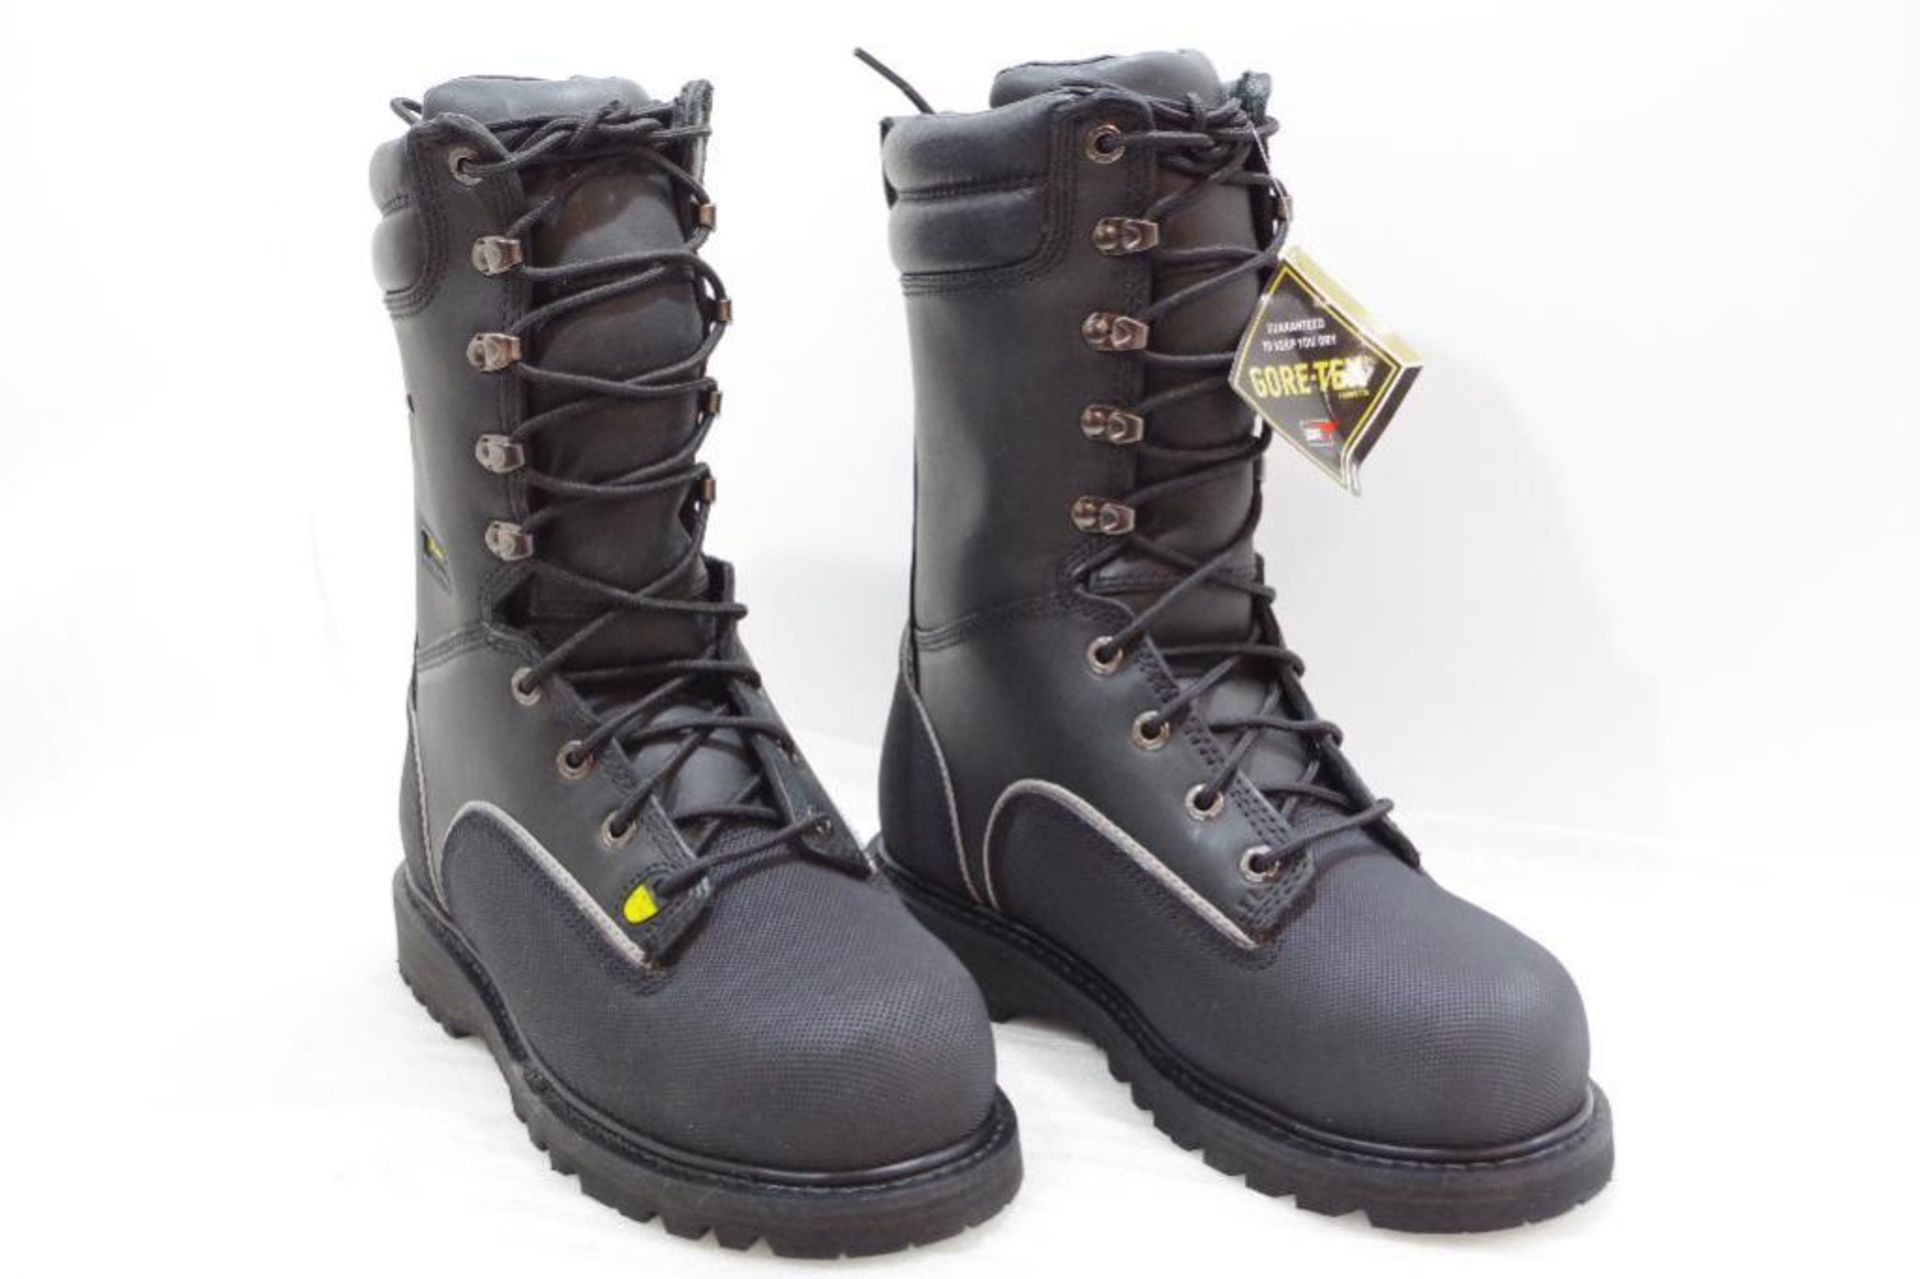 NEW LACROSS 10"H Men's Black Miner Boots, Composite Toe, Leather Upper, Size 8-1/2 M/N 00552090-8.5W